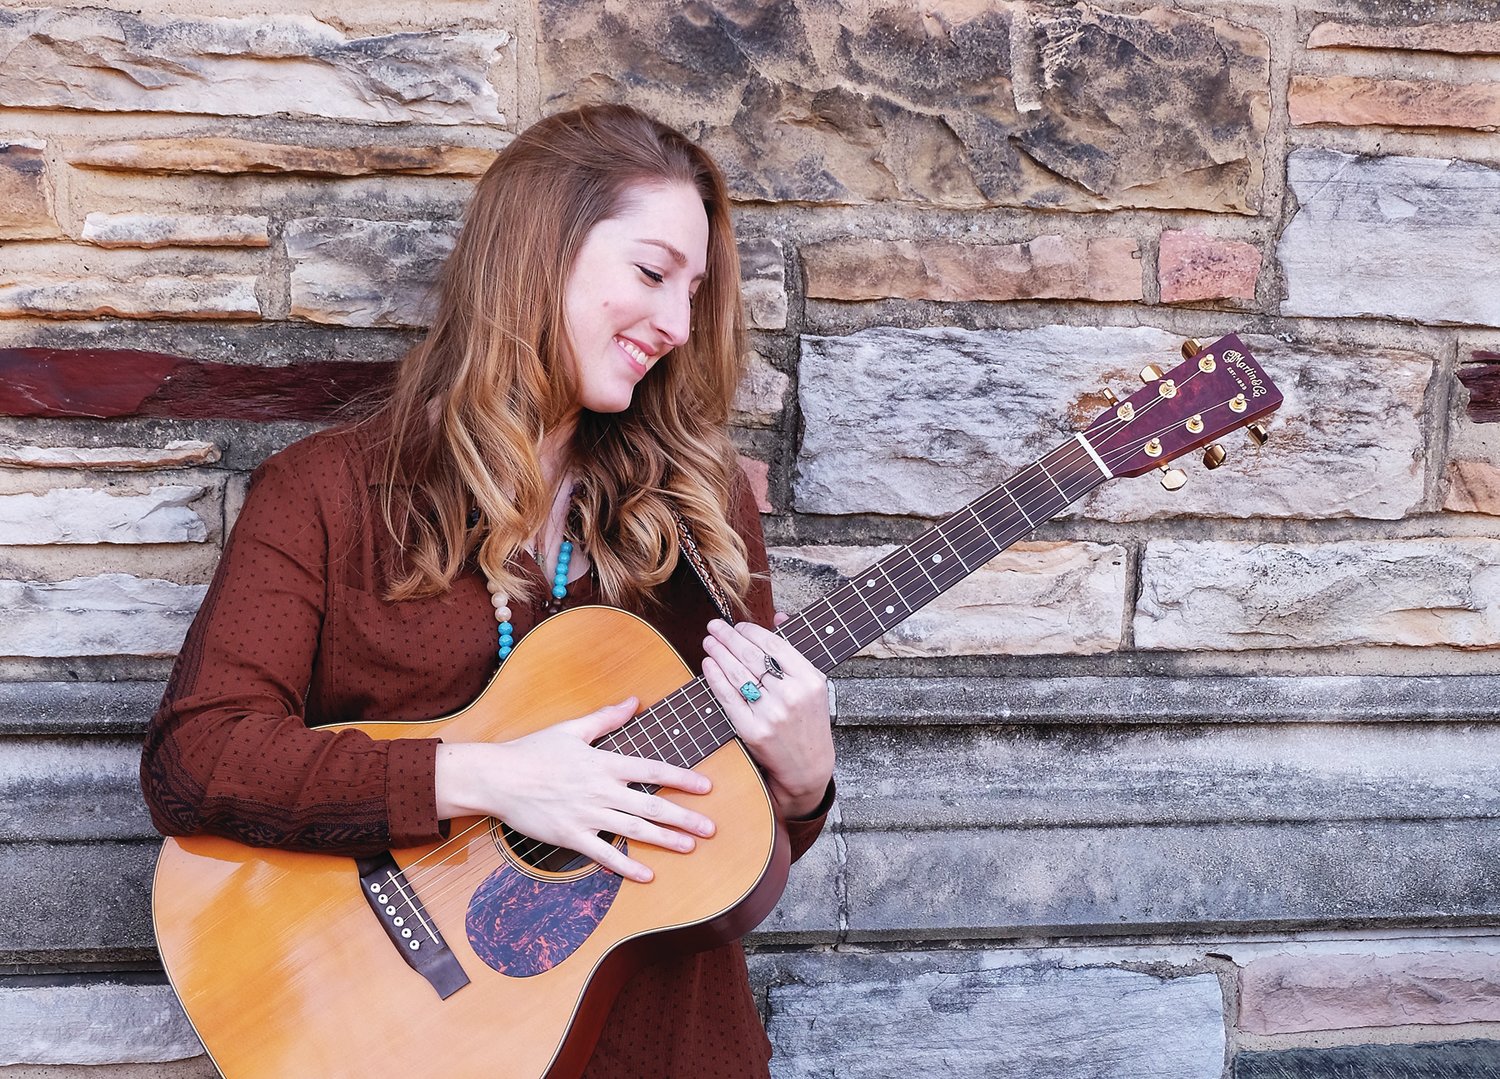 Ottsville-based songwriter Amanda Penecale will perform at Festival UnBound in Bethlehem.